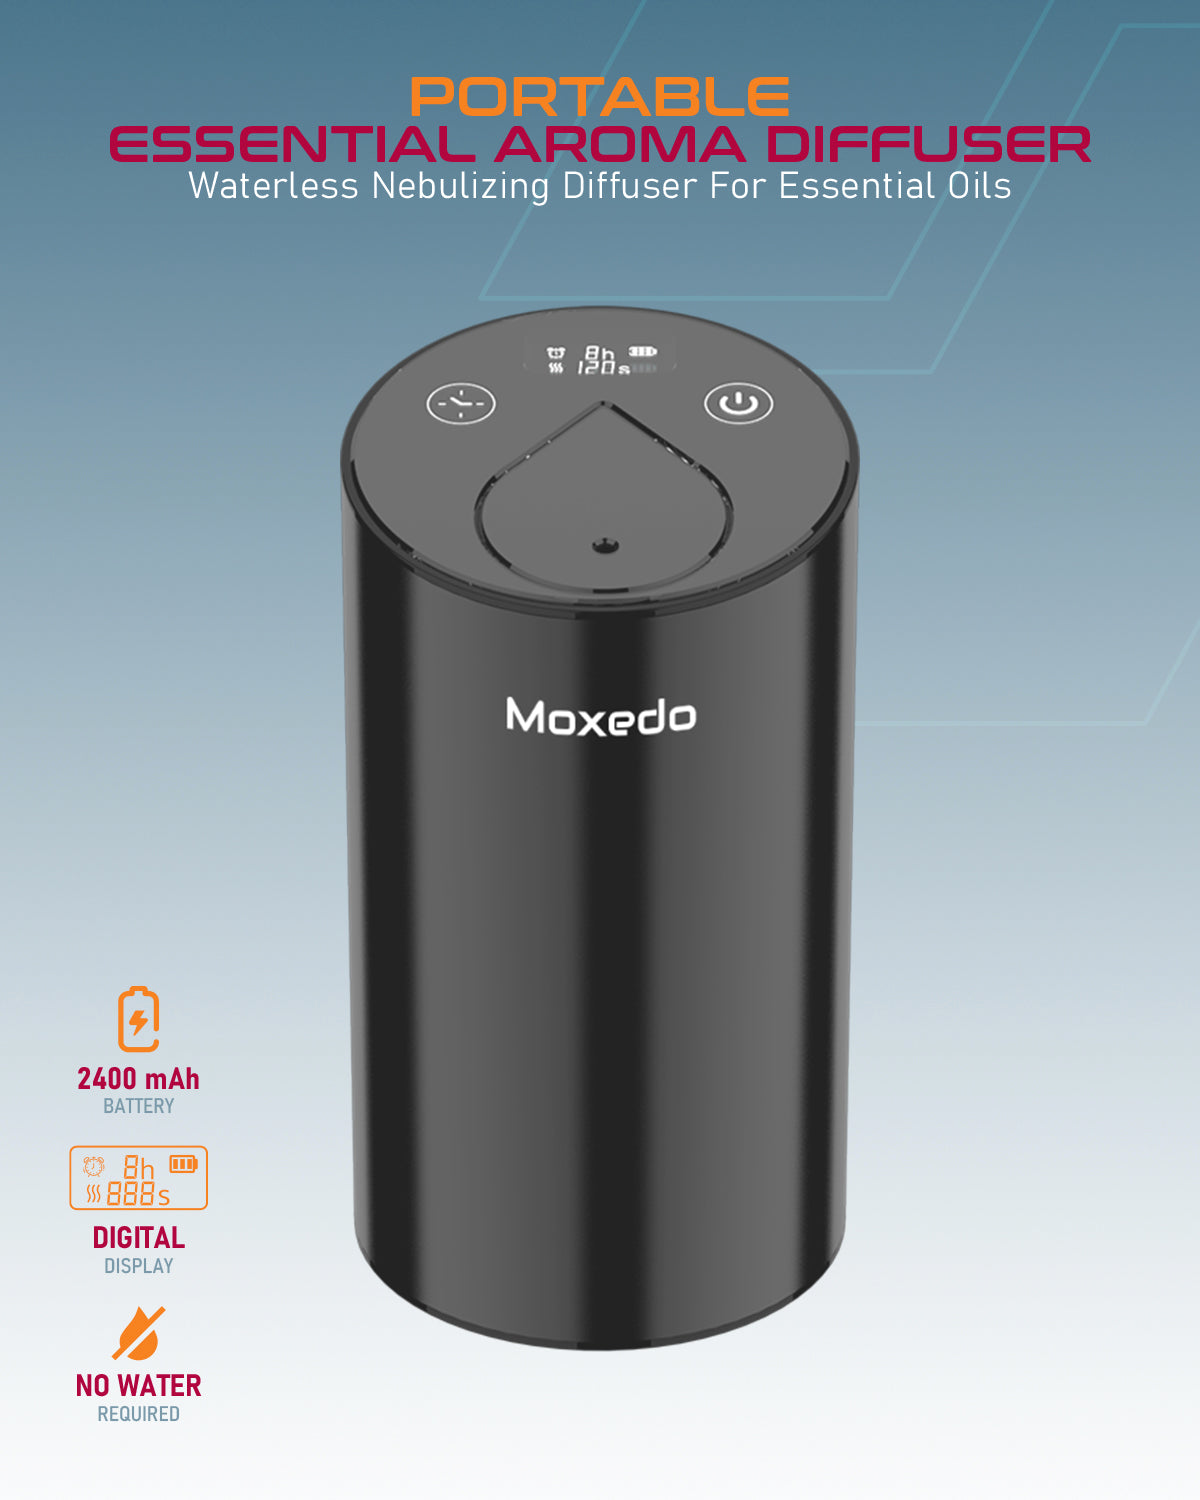 Moxedo Essential Aroma Diffuser Waterless Nebulizing Diffuser